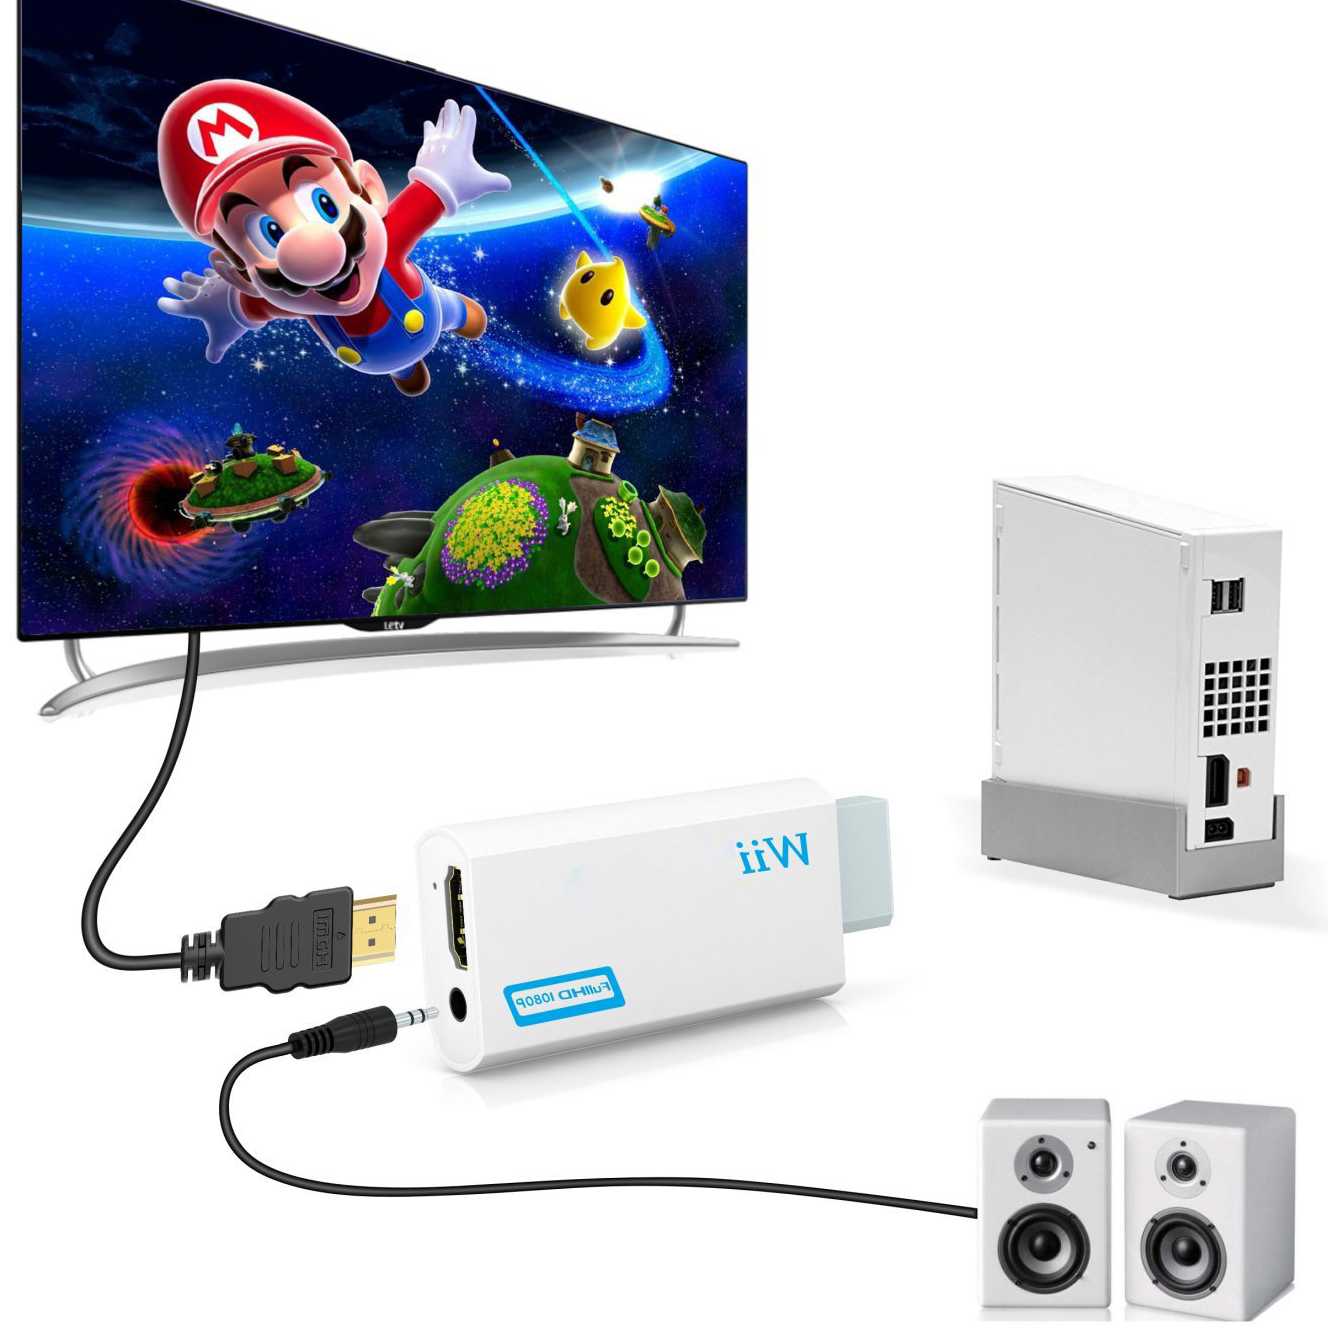 Opinie Konwerter Full HD 1080P Wii2HDMI z Adapterem Audio 3.5mm dla… sklep online